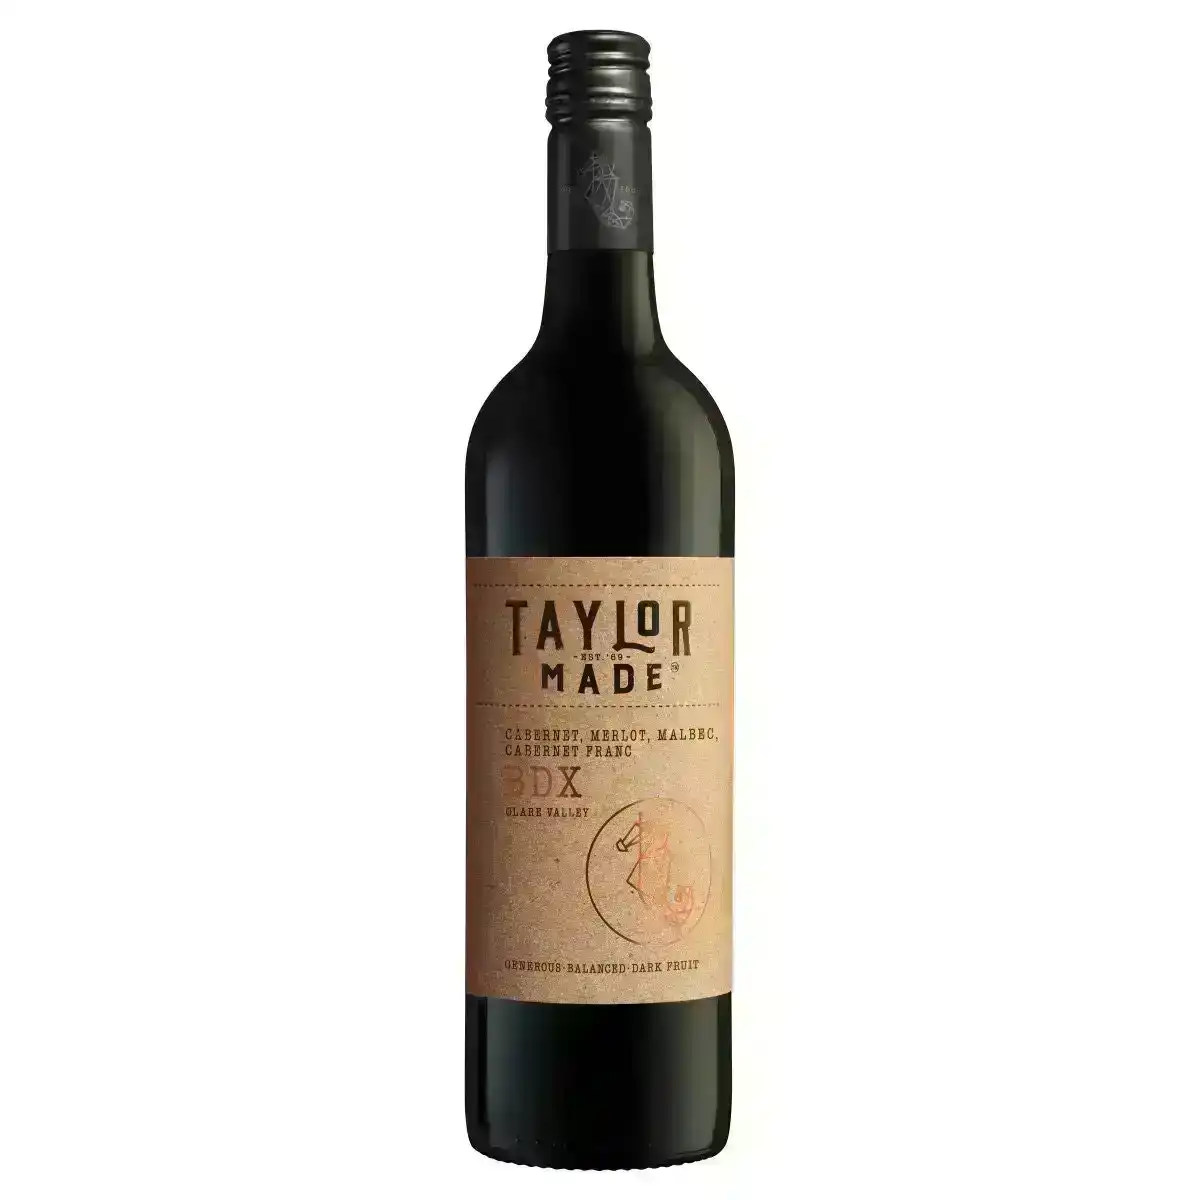 Taylors Taylor Made BDX Red Blend (750mL)